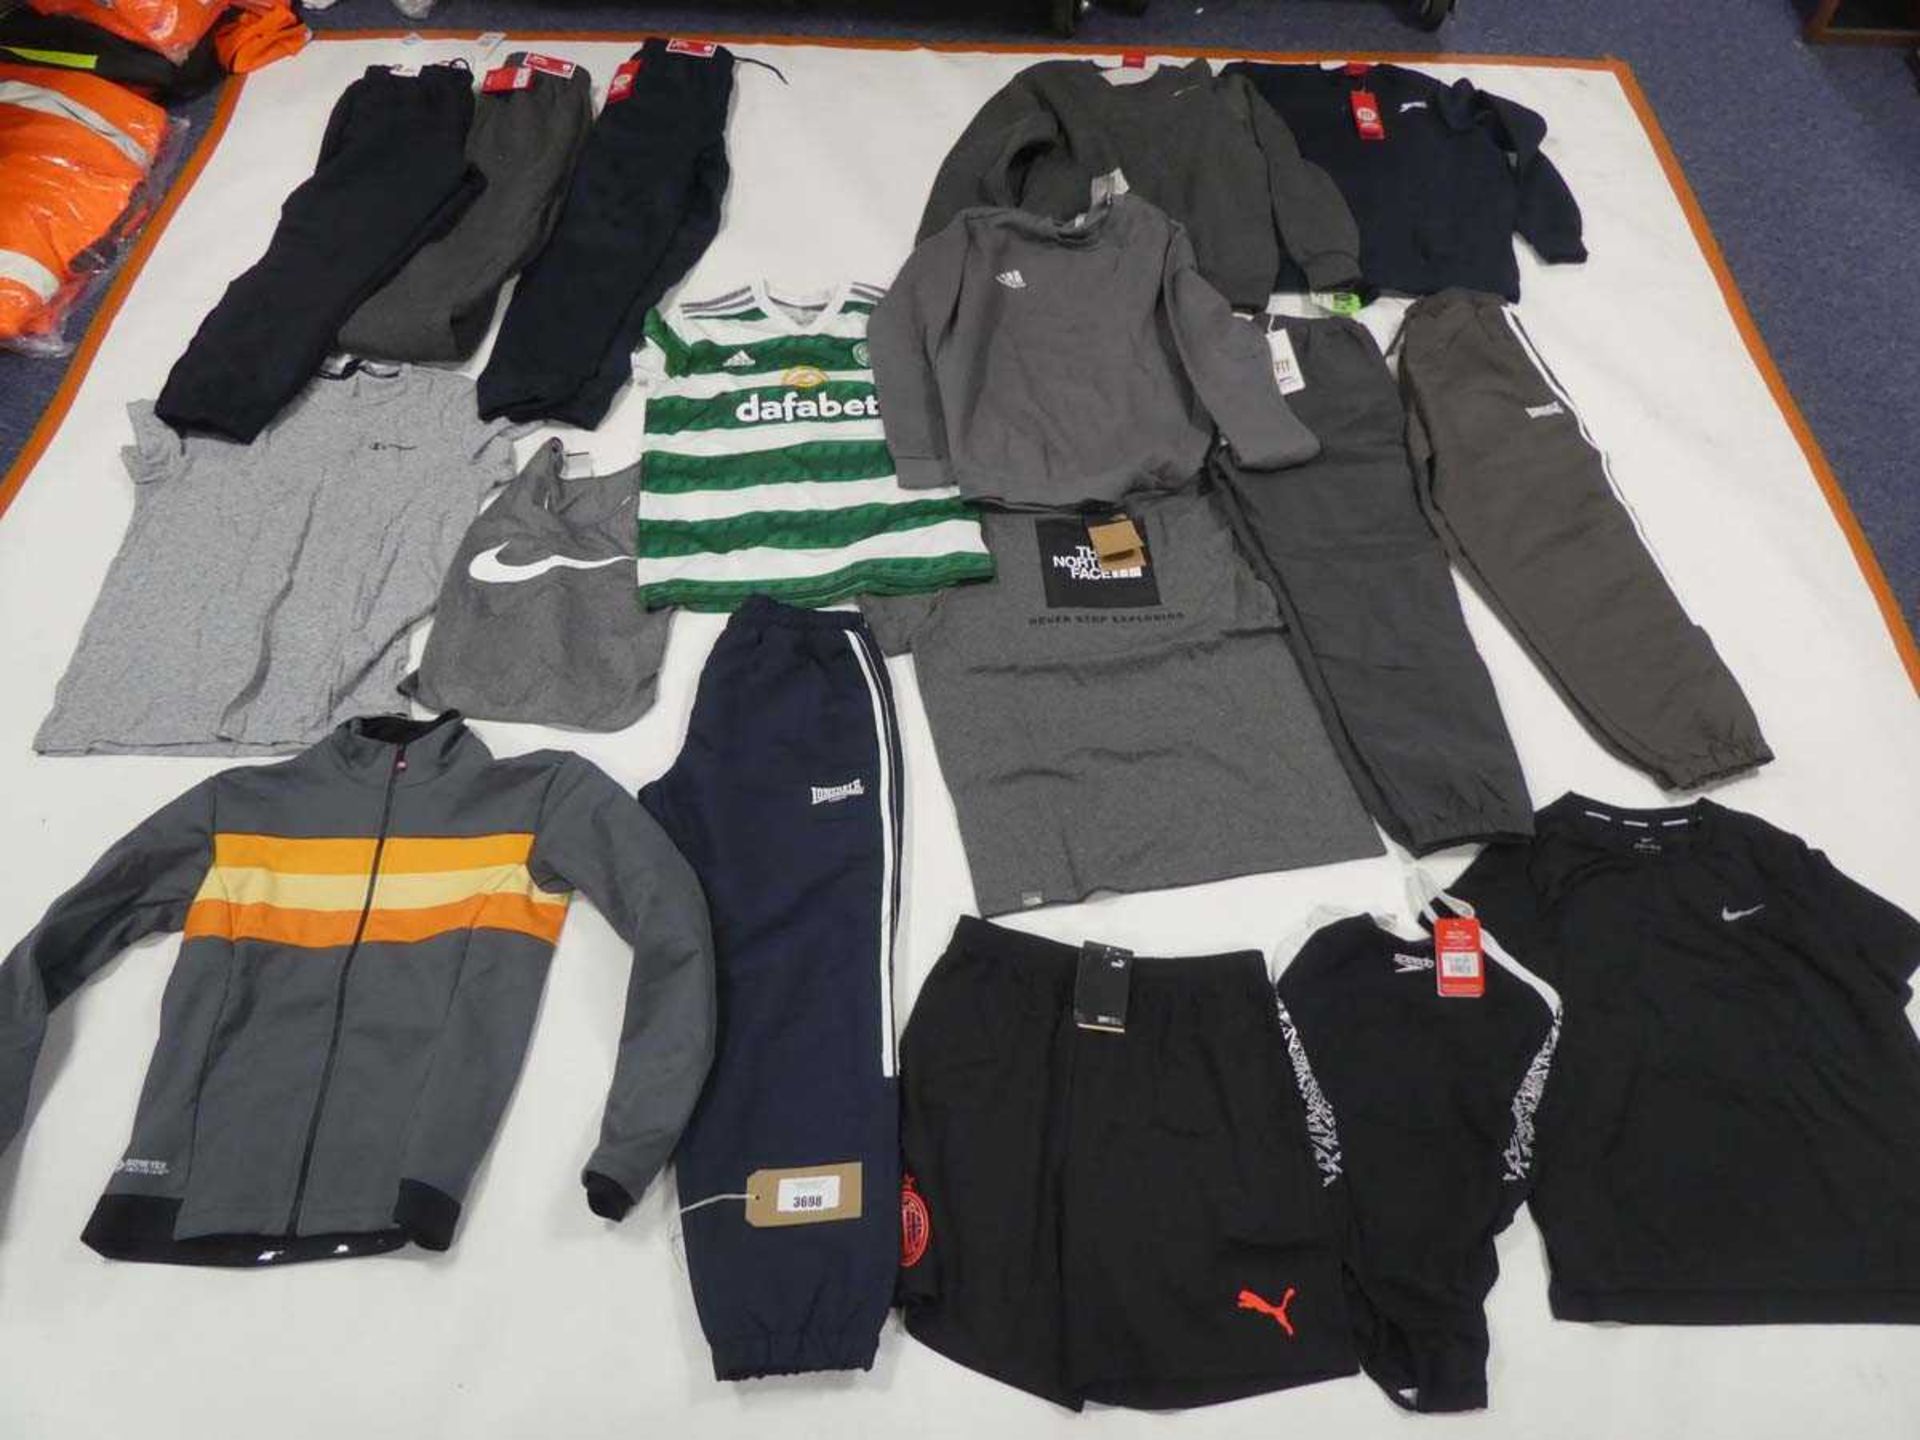 +VAT Selection of sportswear to include Nike, Adidas, Castelli, etc